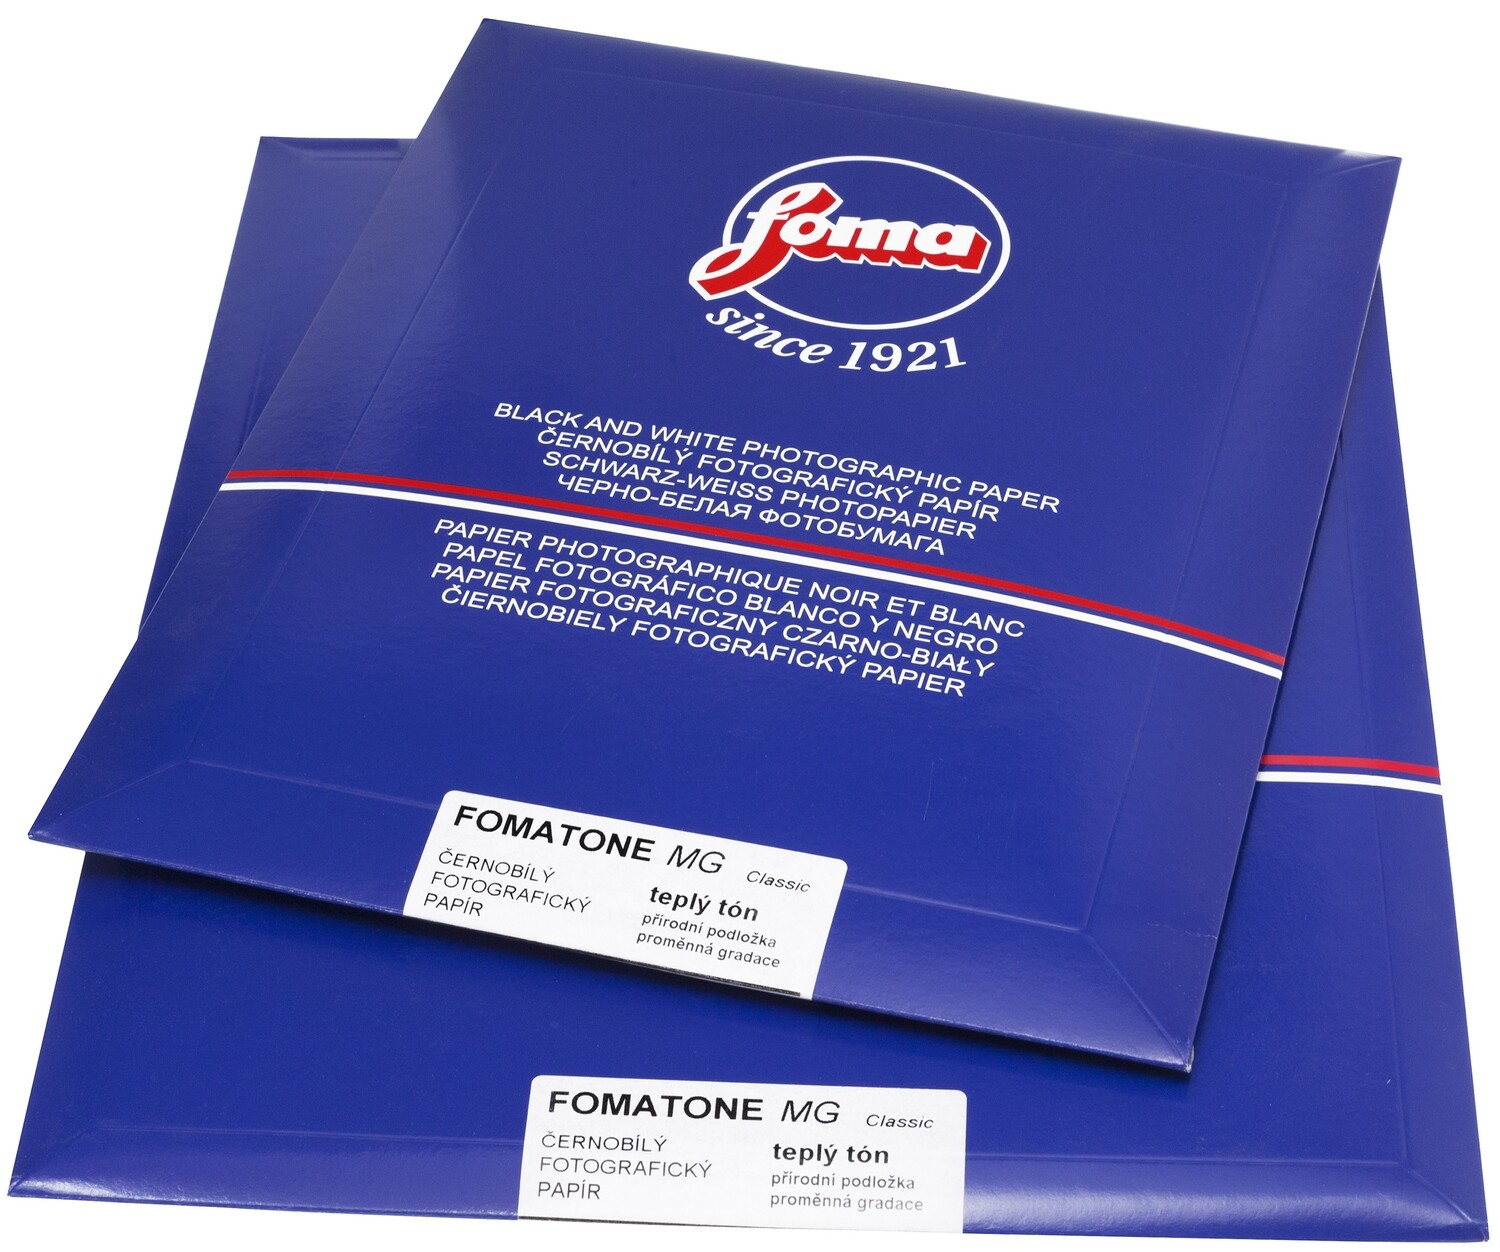 FOMA Fomatone MG 131 Classic warmtone Glossy (Baryt) 17.8x24.1cm  / 7x9.5 Inch - 50 sheets Gradation Varabel -